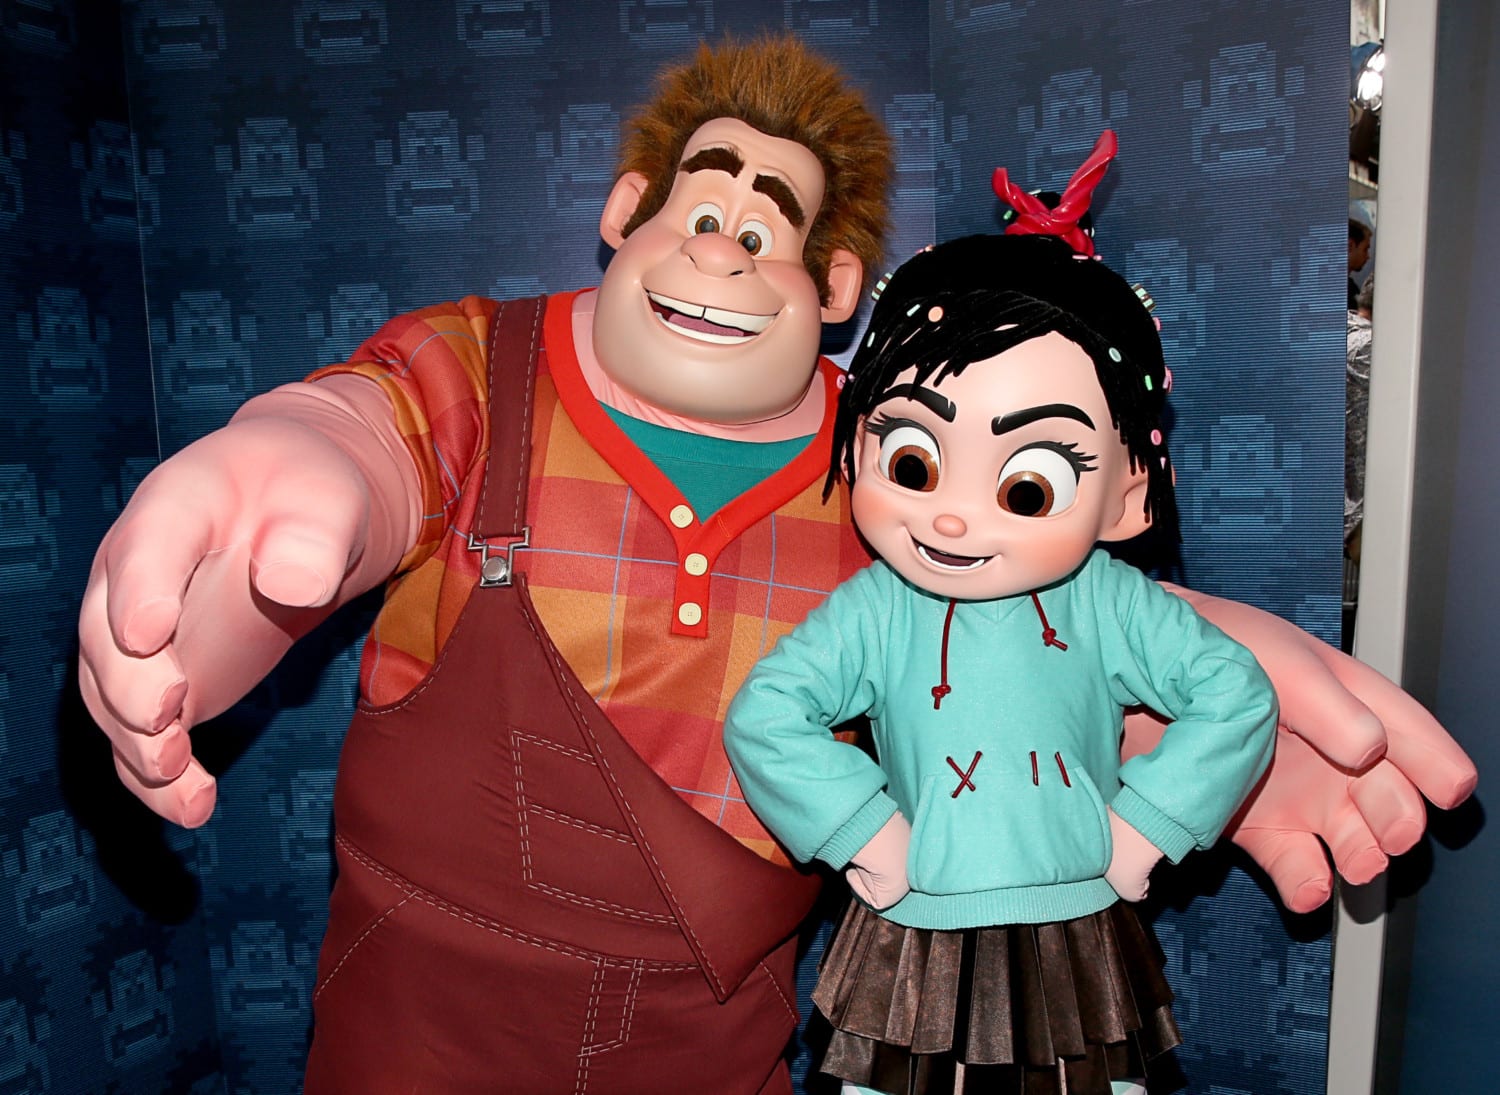 Premiere Of Walt Disney Animation Studios' 'Wreck-It Ralph' - Red Carpet